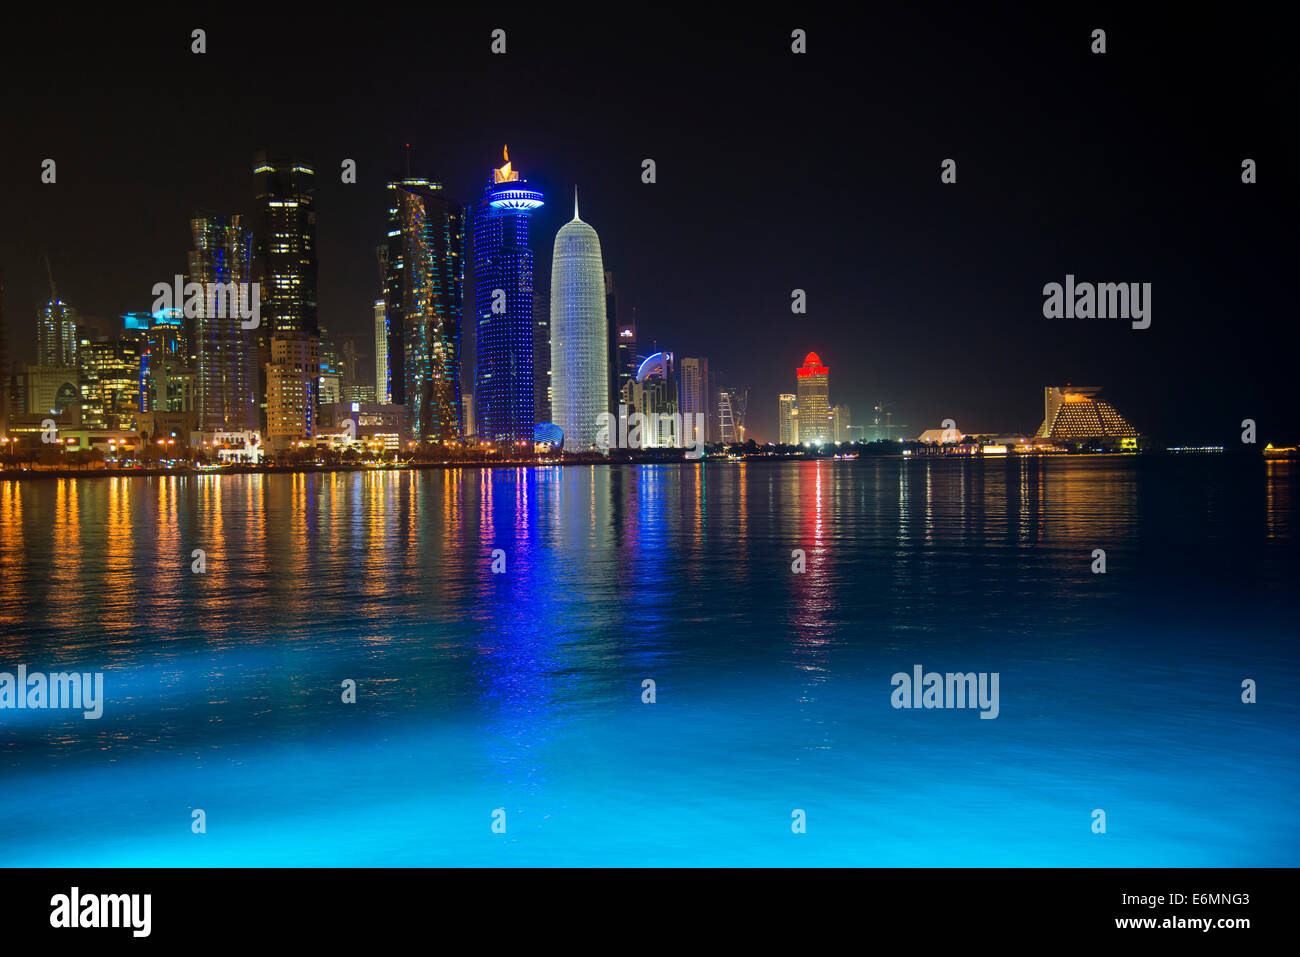 Night scene of the skyline of Doha with Al Bidda Tower, World Trade Center, Palm Tower 1 and 2, Burj Qatar Tower, Doha Corniche Stock Photo